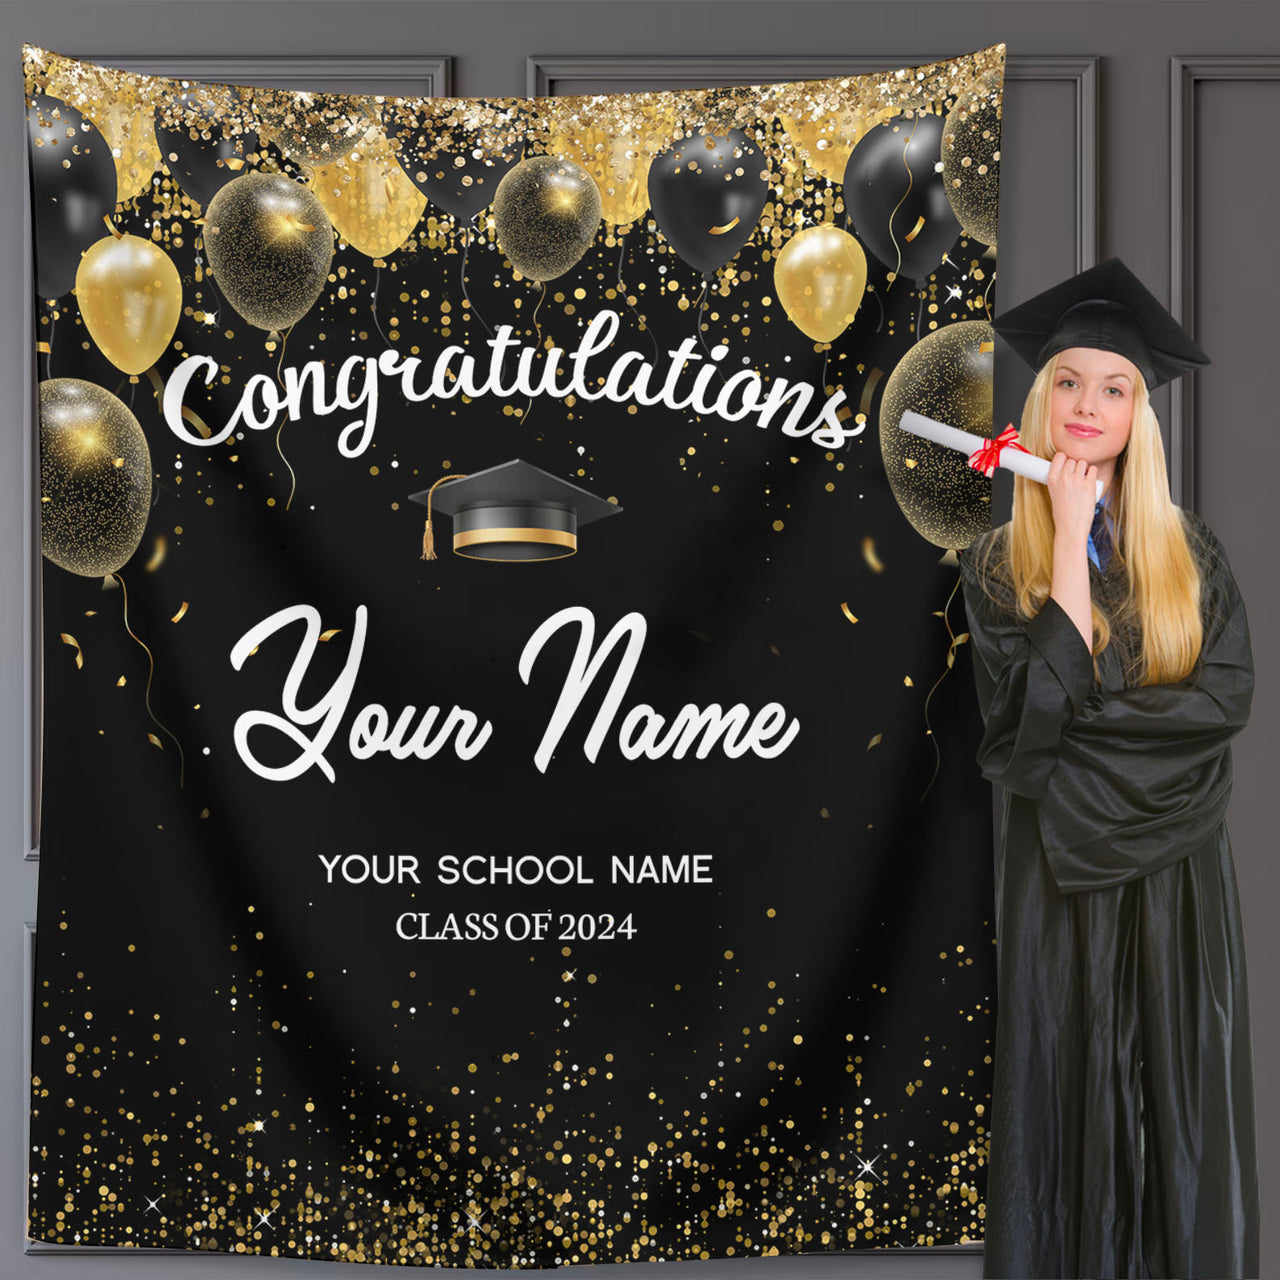 Custom Congratulations Glitter Balloons Graduation Backdrop, Graduation Party Decorations